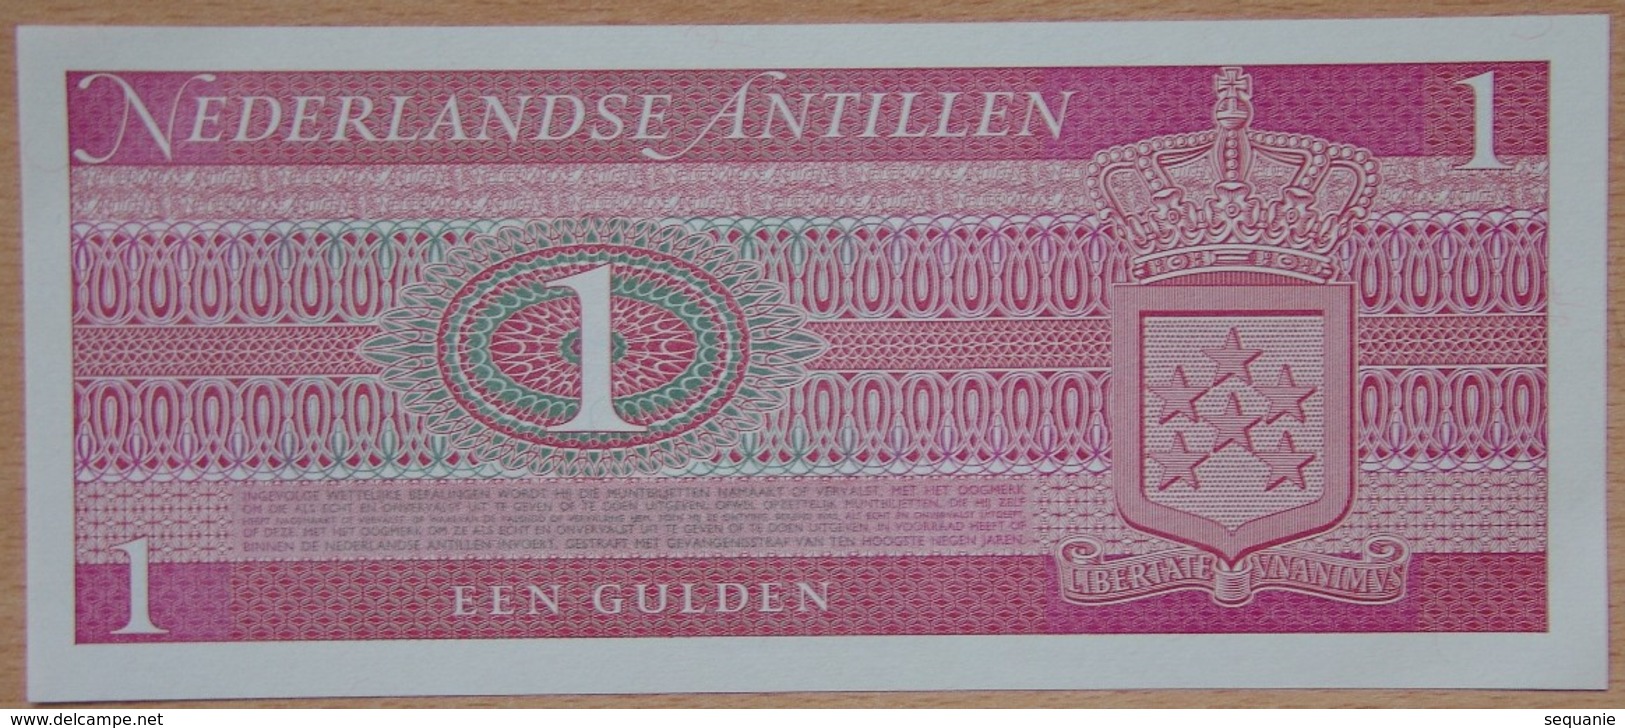 PAYS-BAS Antilles Néerlandaises 1 Gulden 08 Septembre 1970 - Antilles Néerlandaises (...-1986)